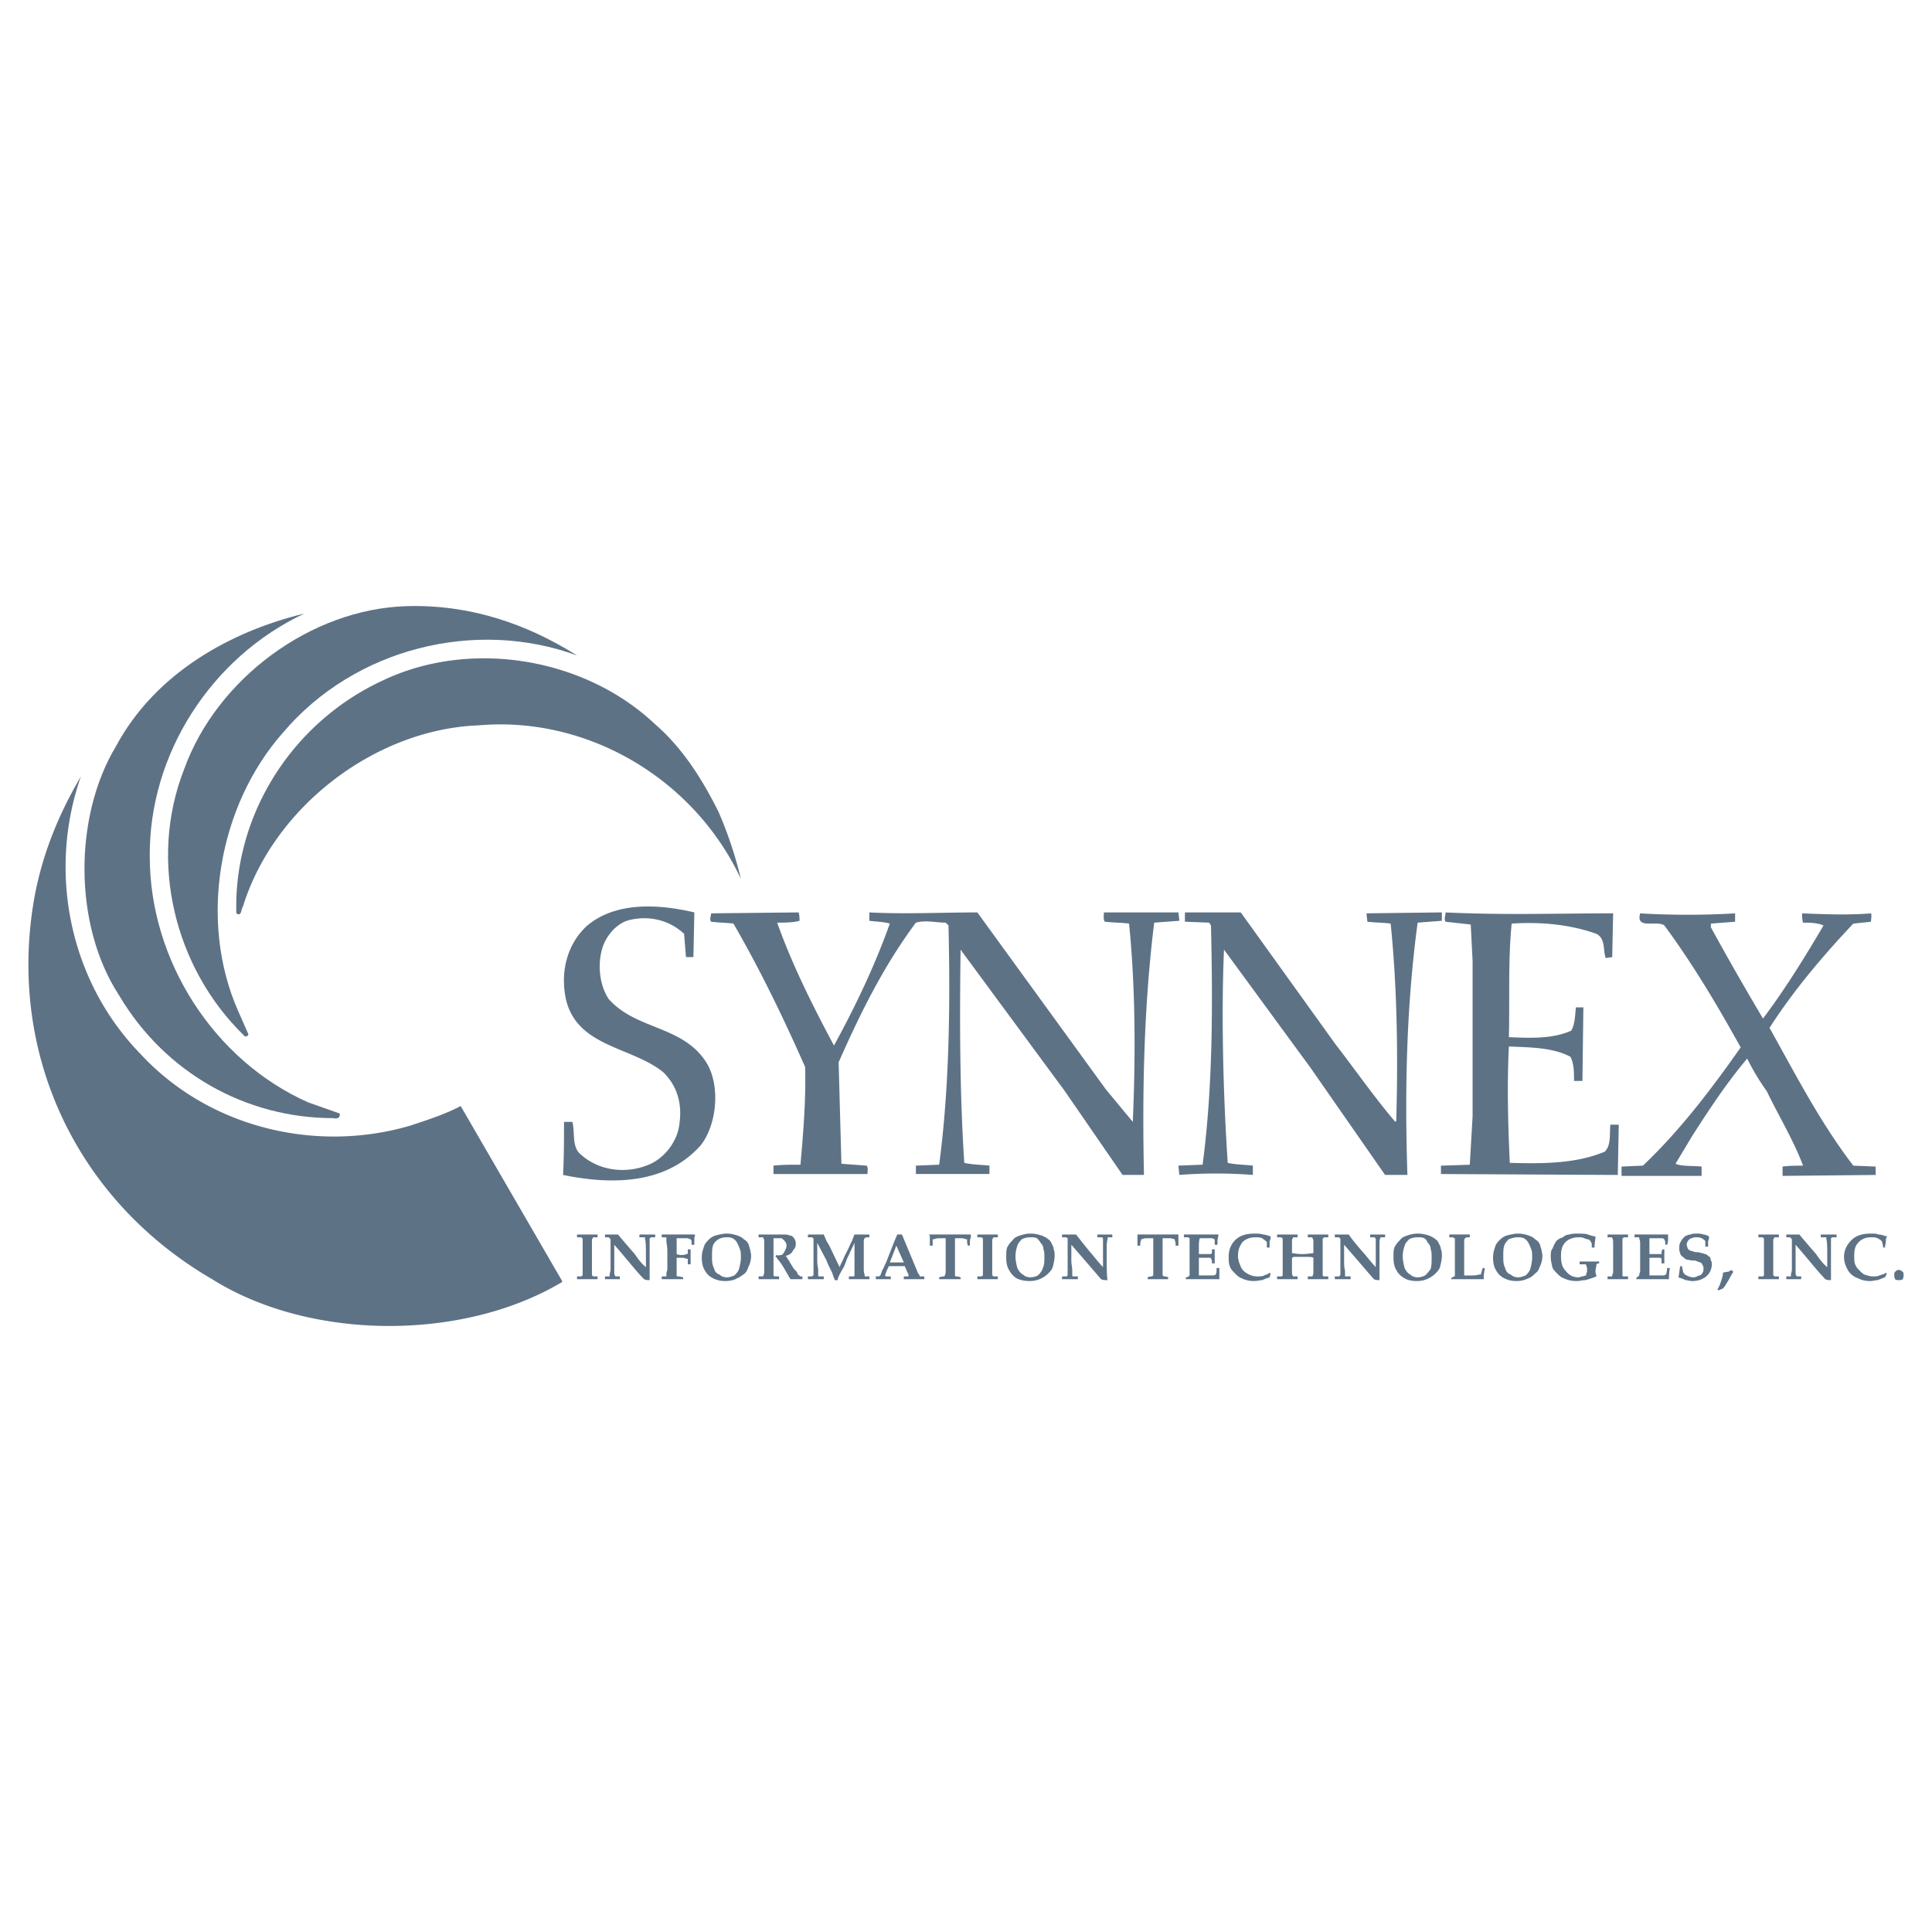 Synnex logo colors